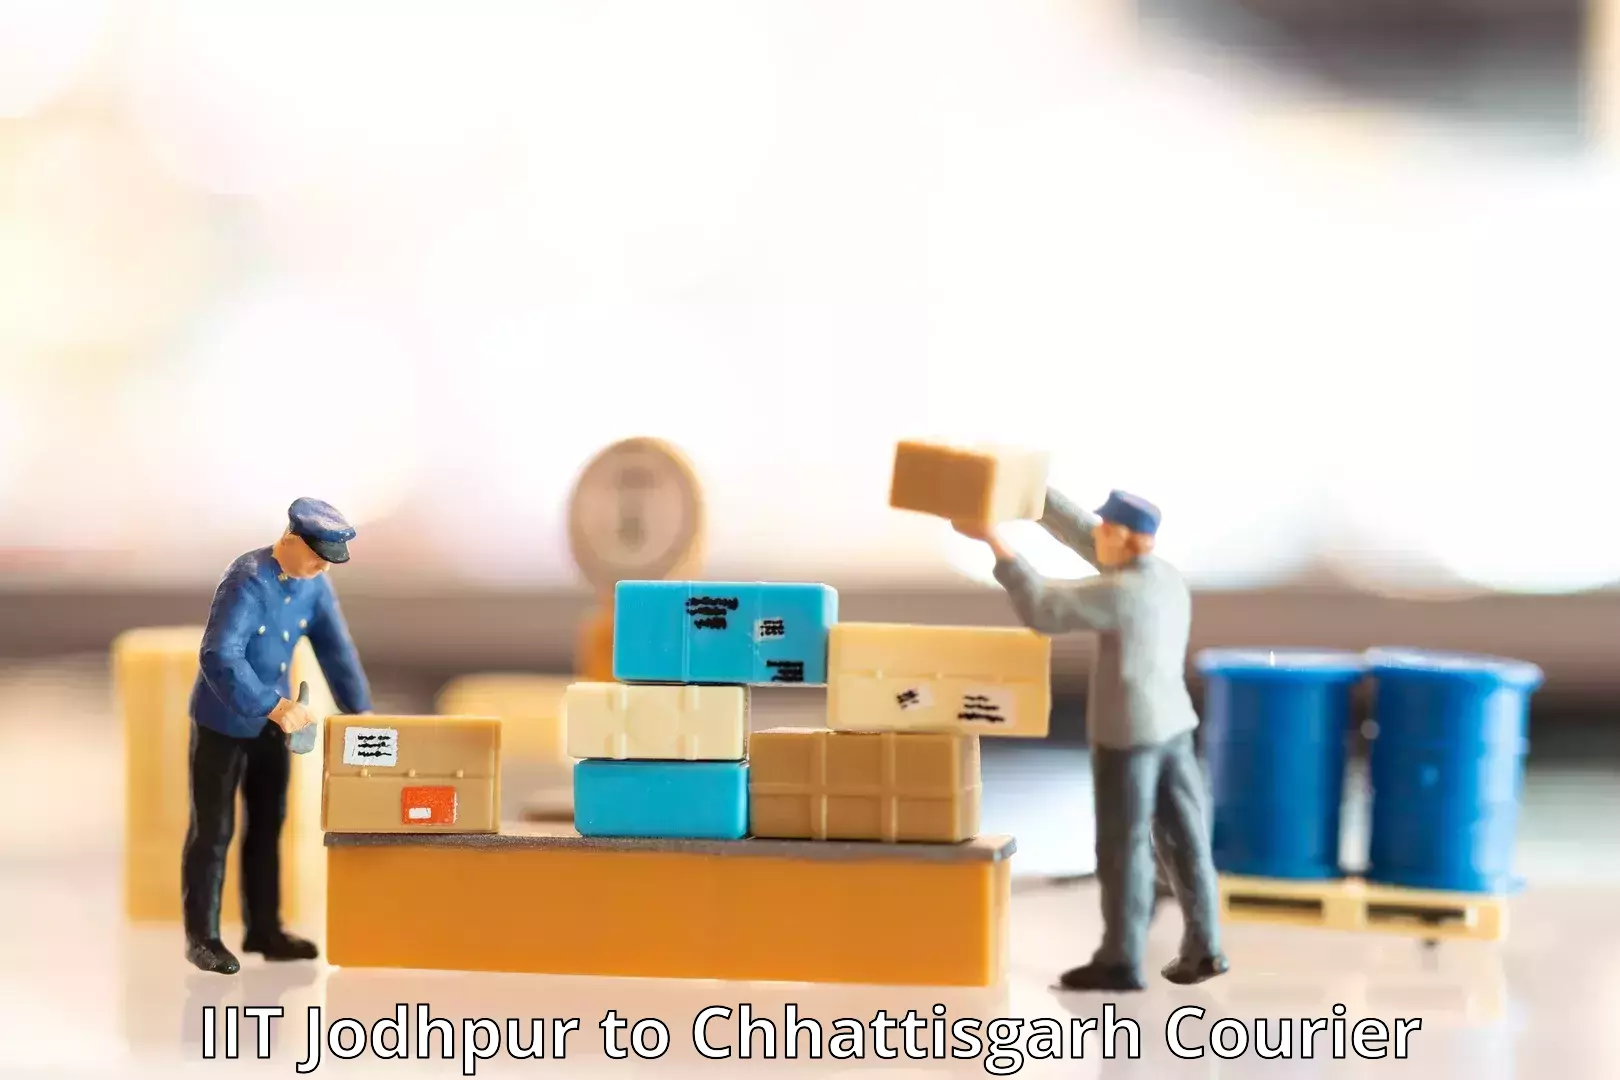 Nationwide delivery network IIT Jodhpur to Korea Chhattisgarh